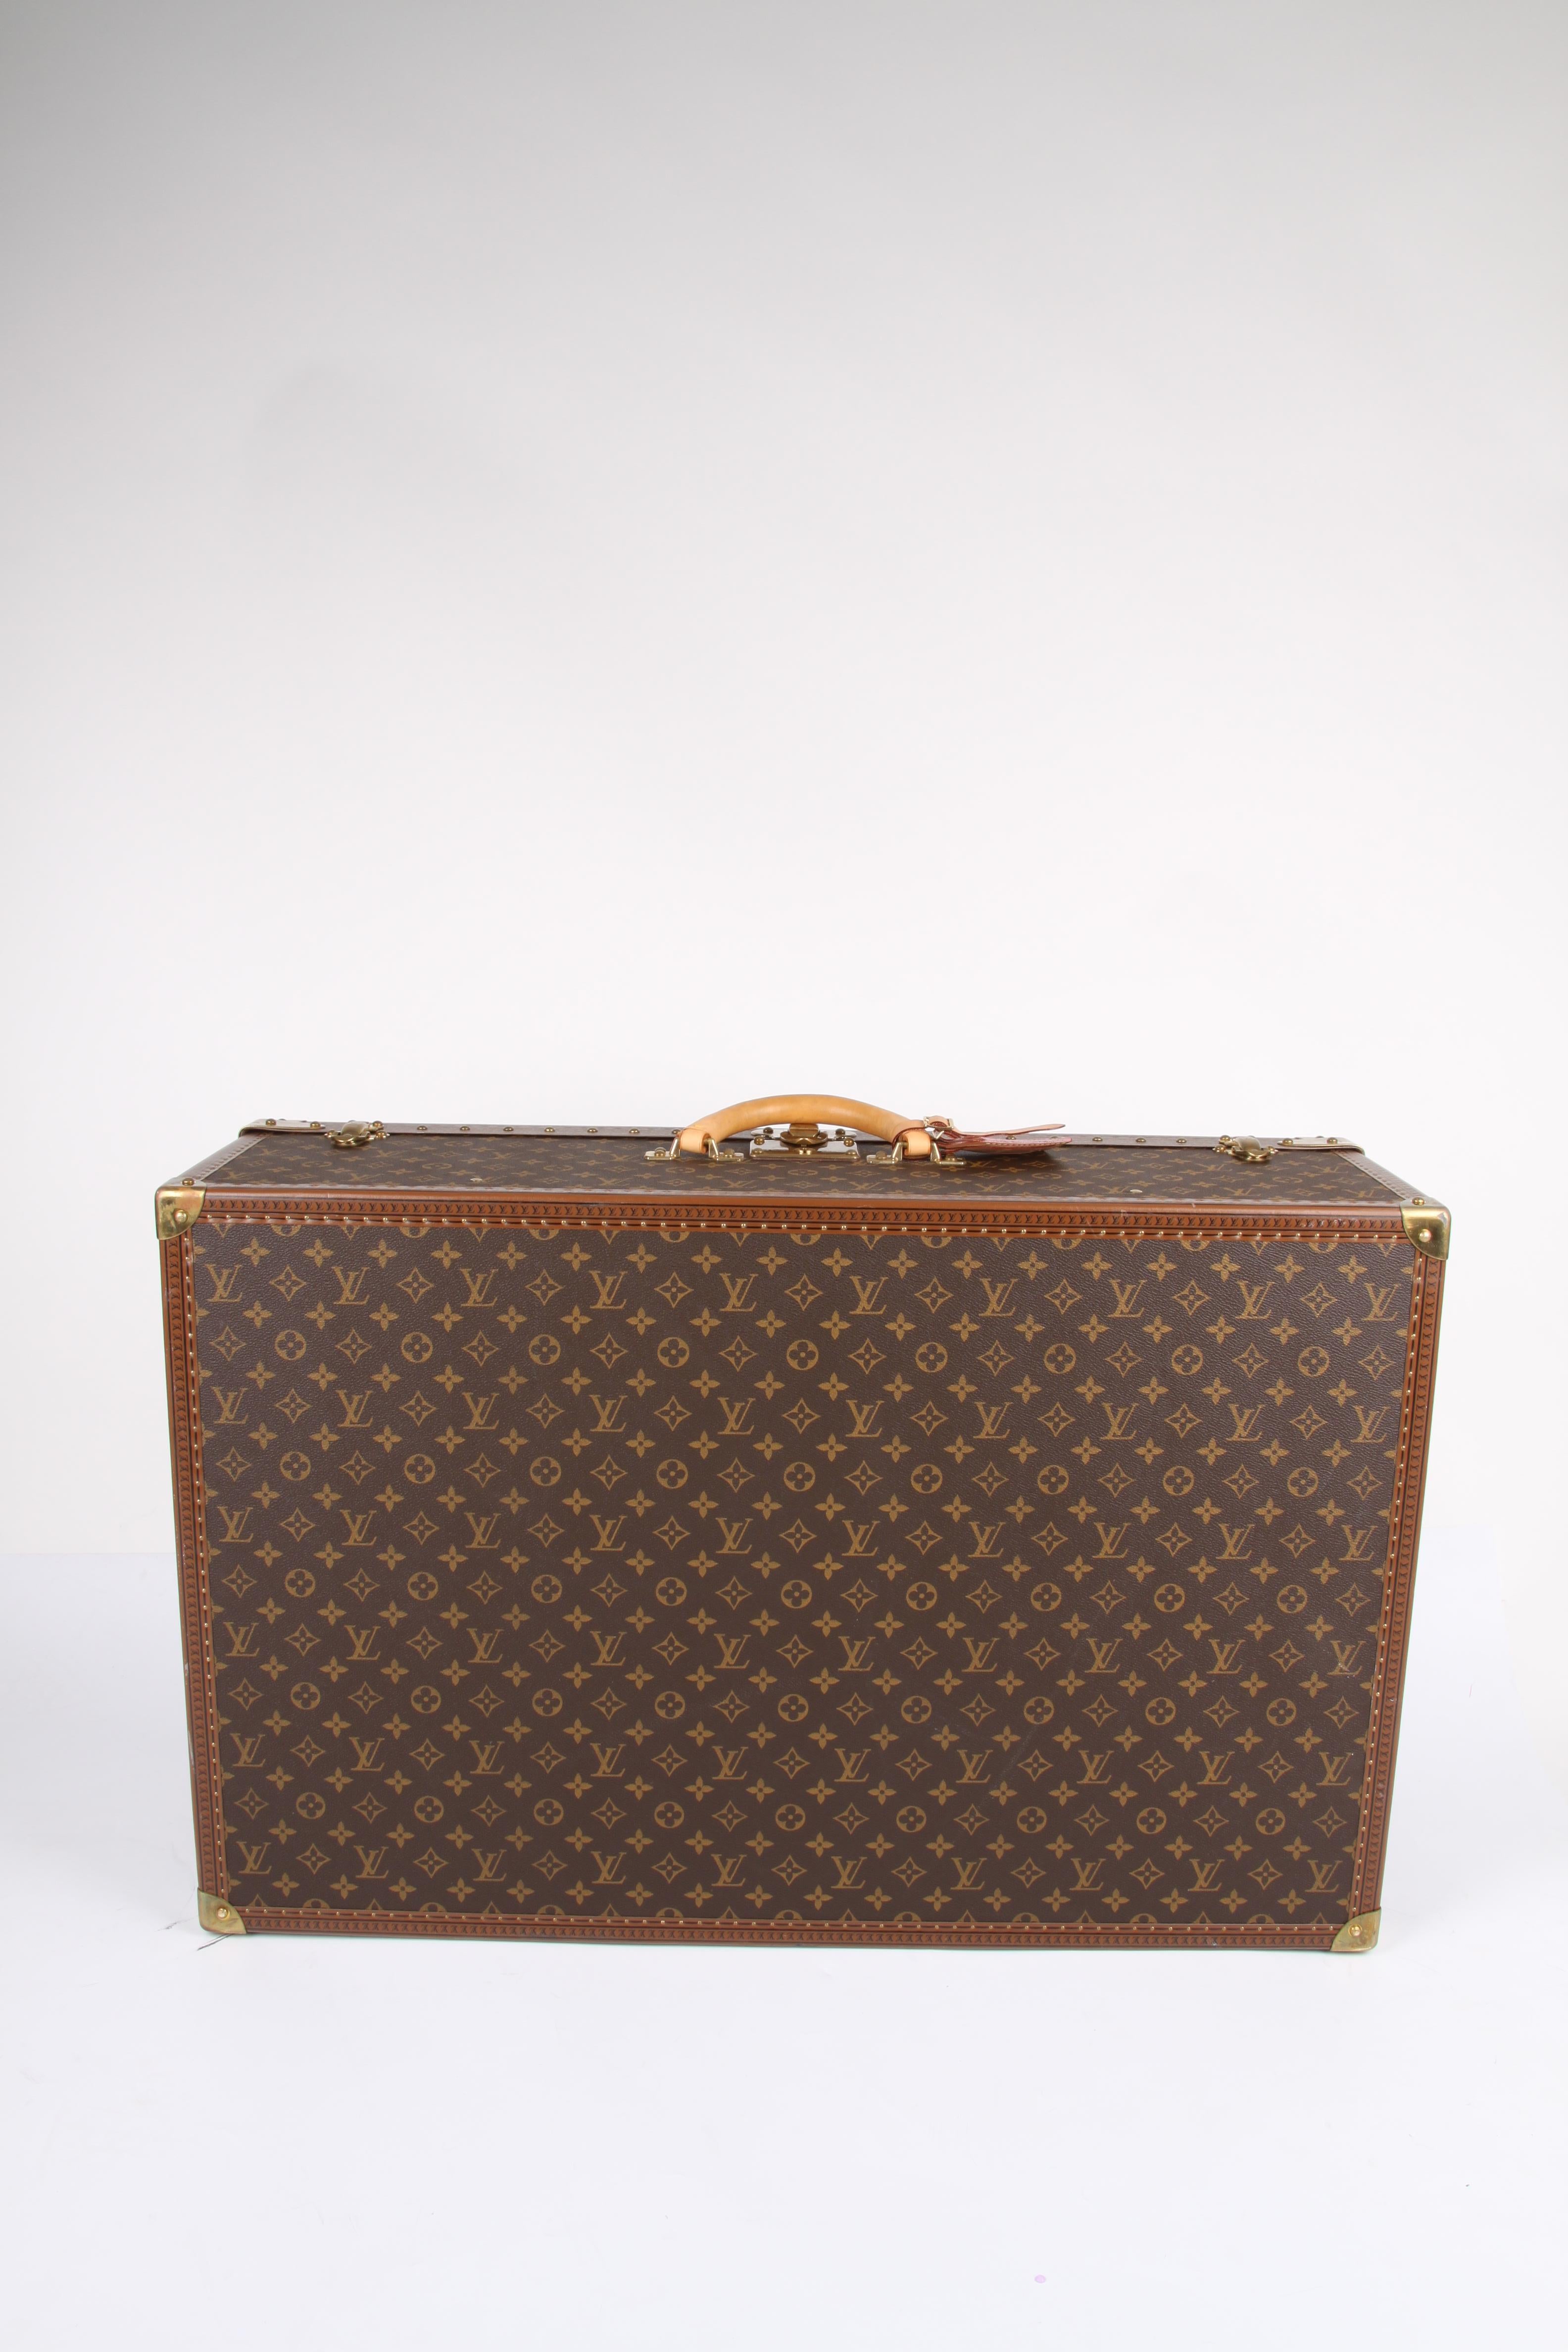   Louis Vuitton Monogram Trunk Suitcase - brown   Louis Vuitton Monogram Trunk S 1